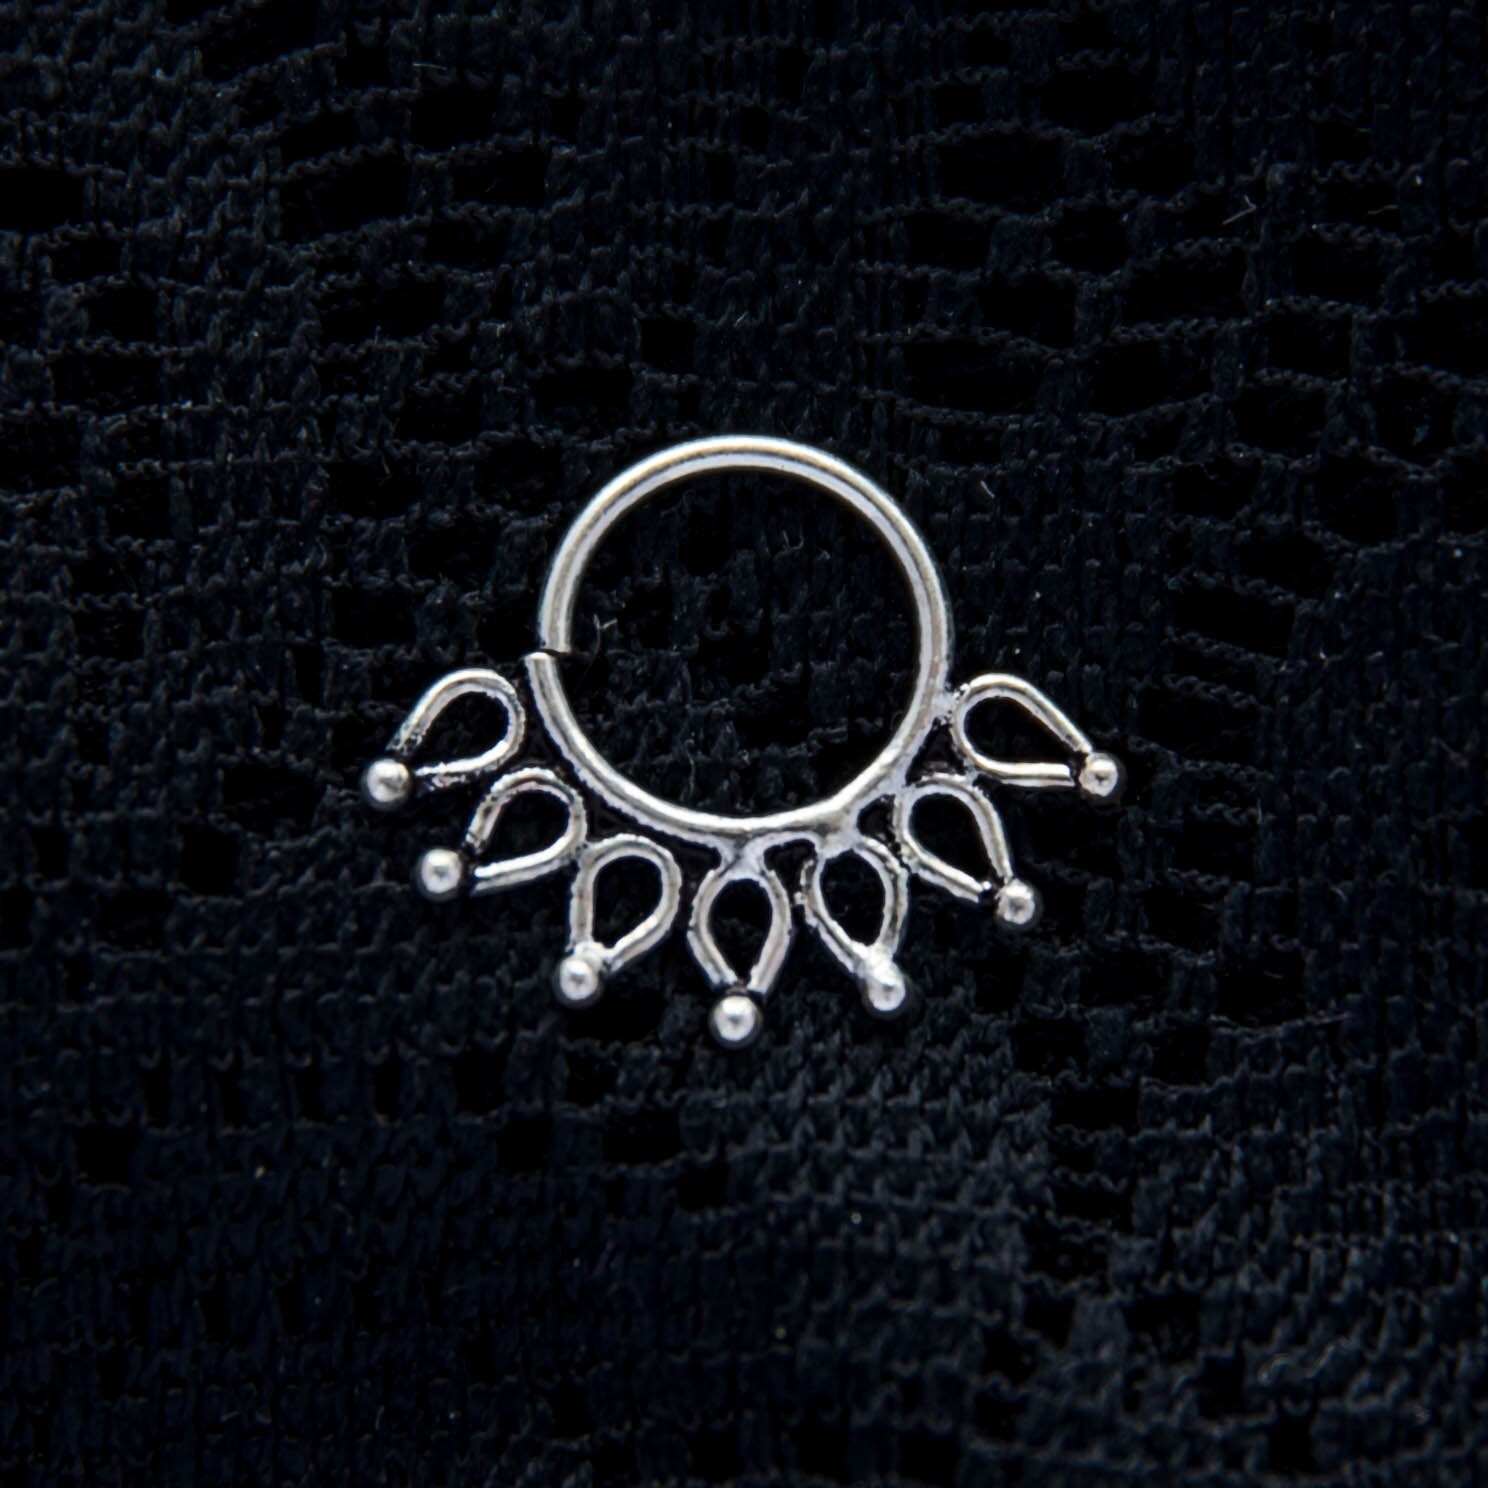 Real Septum ring sterling silver 18G 1mm indian flower design | Etsy